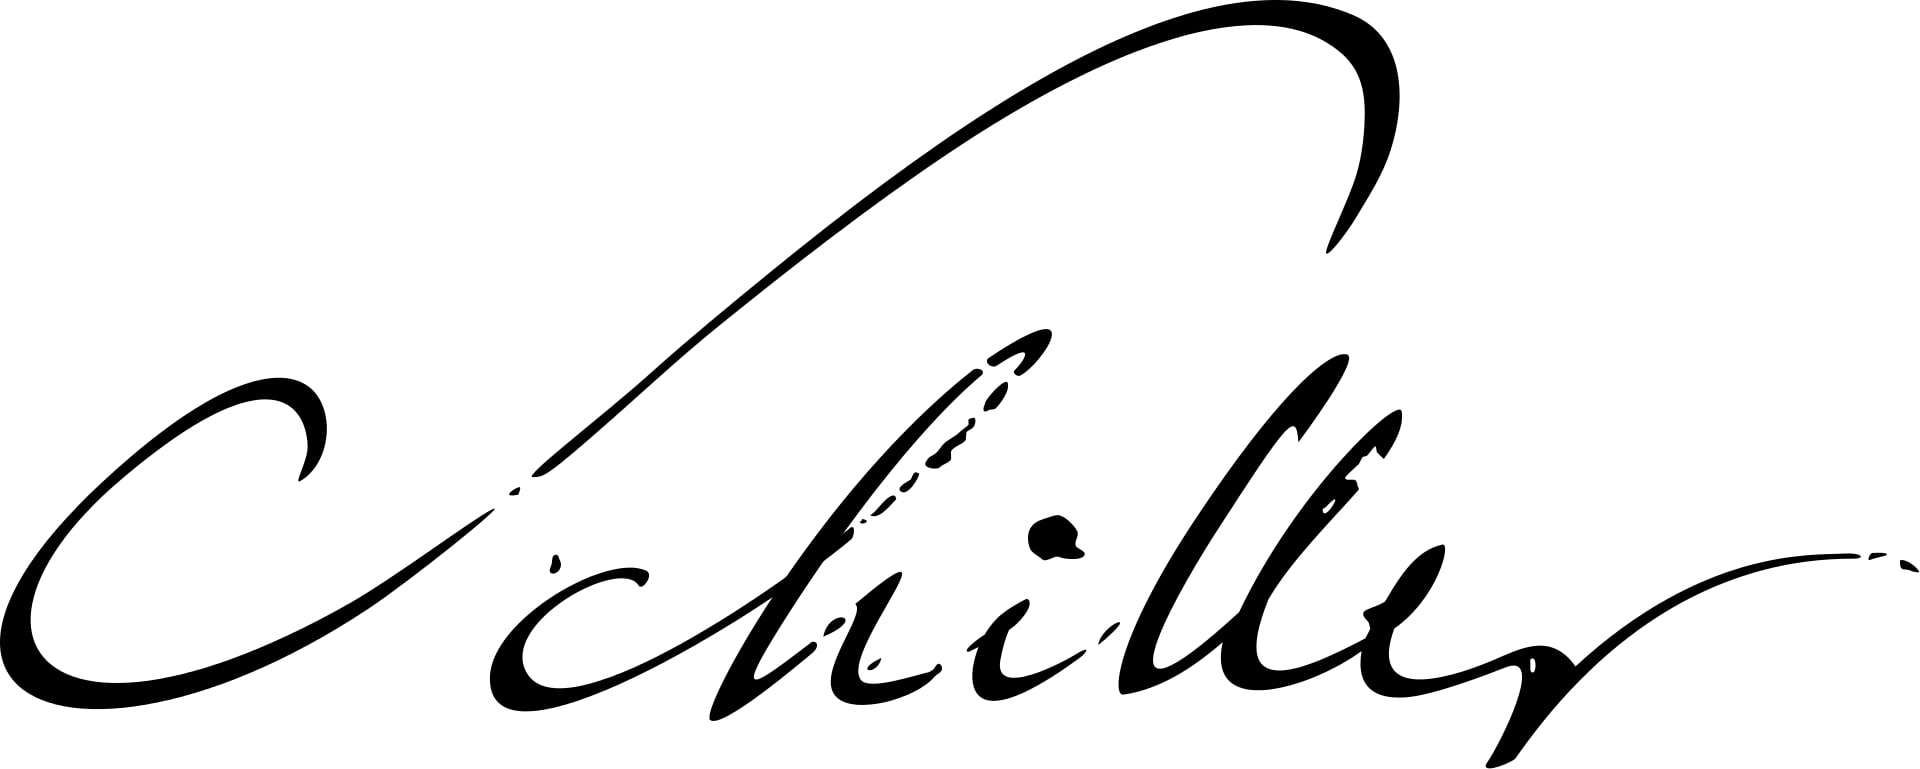 Friedrich Schiller Signature